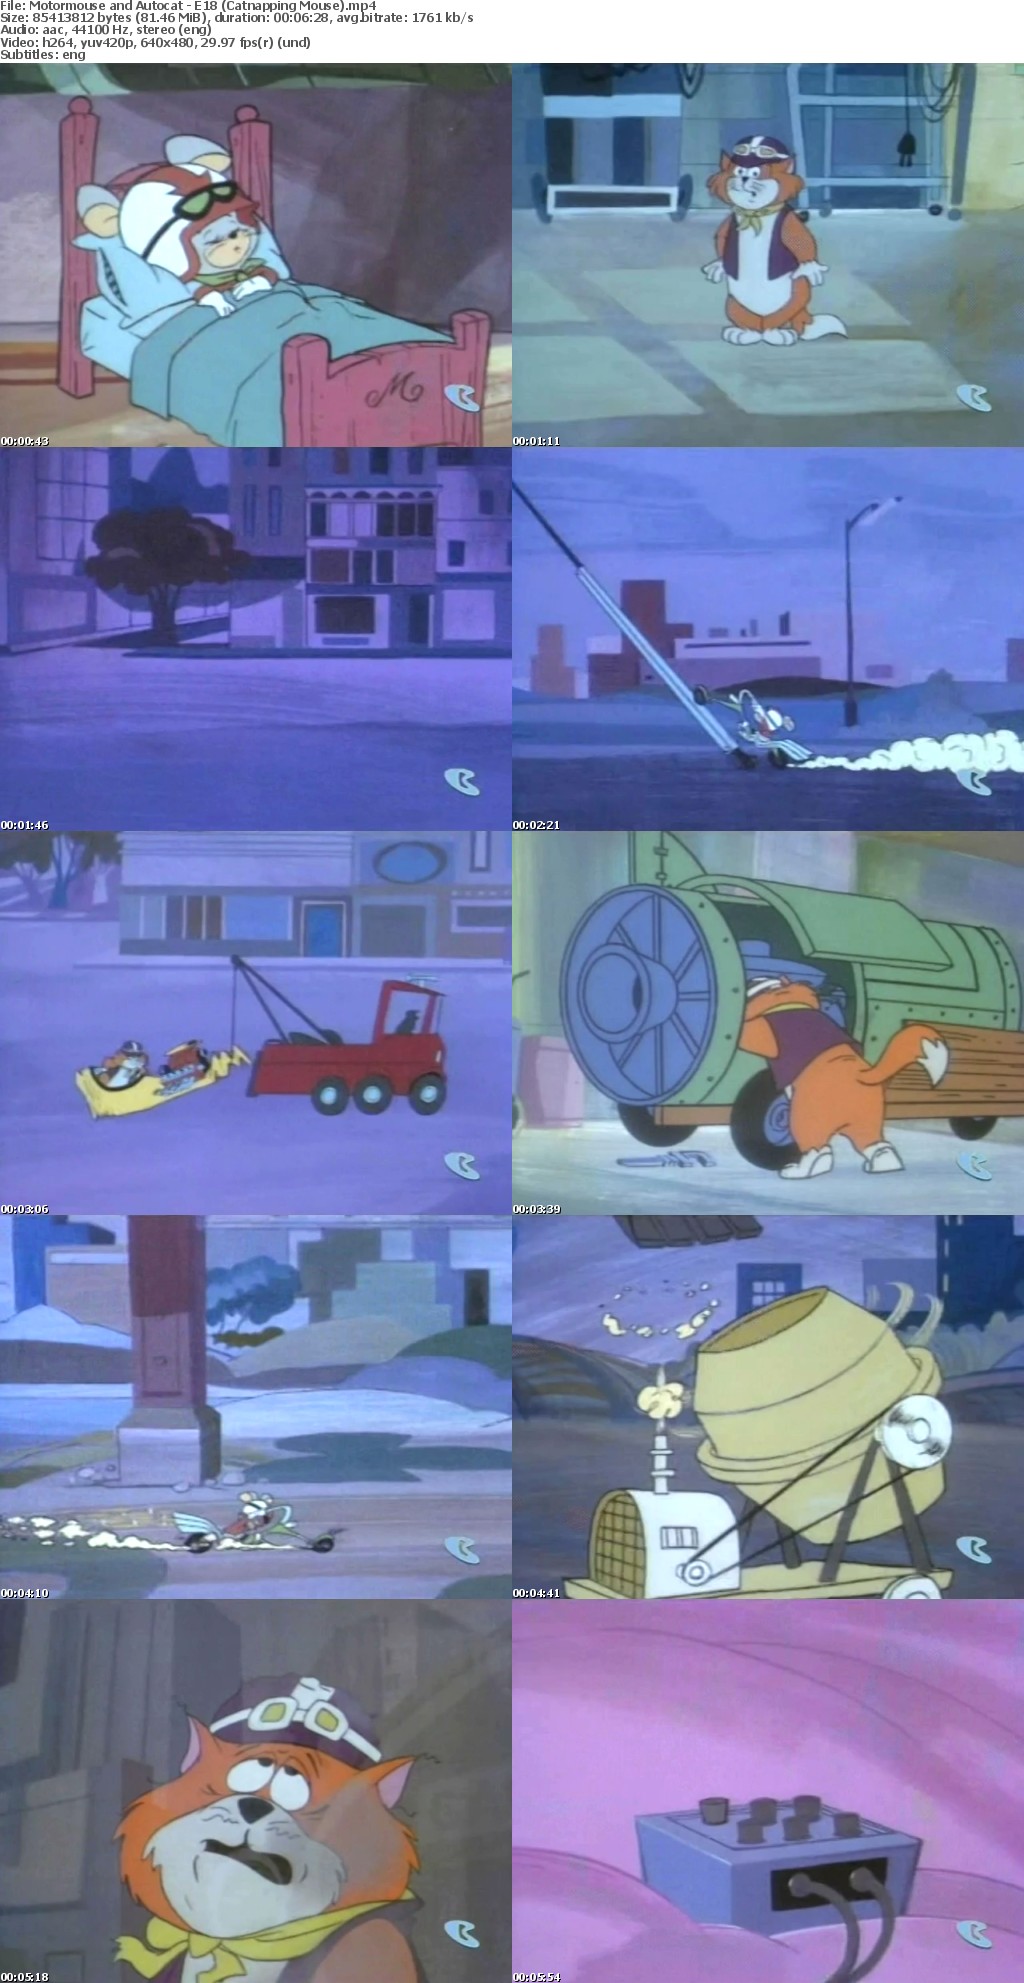 Motormouse and Autocat (Cartoon series in MP4 format) Lando18